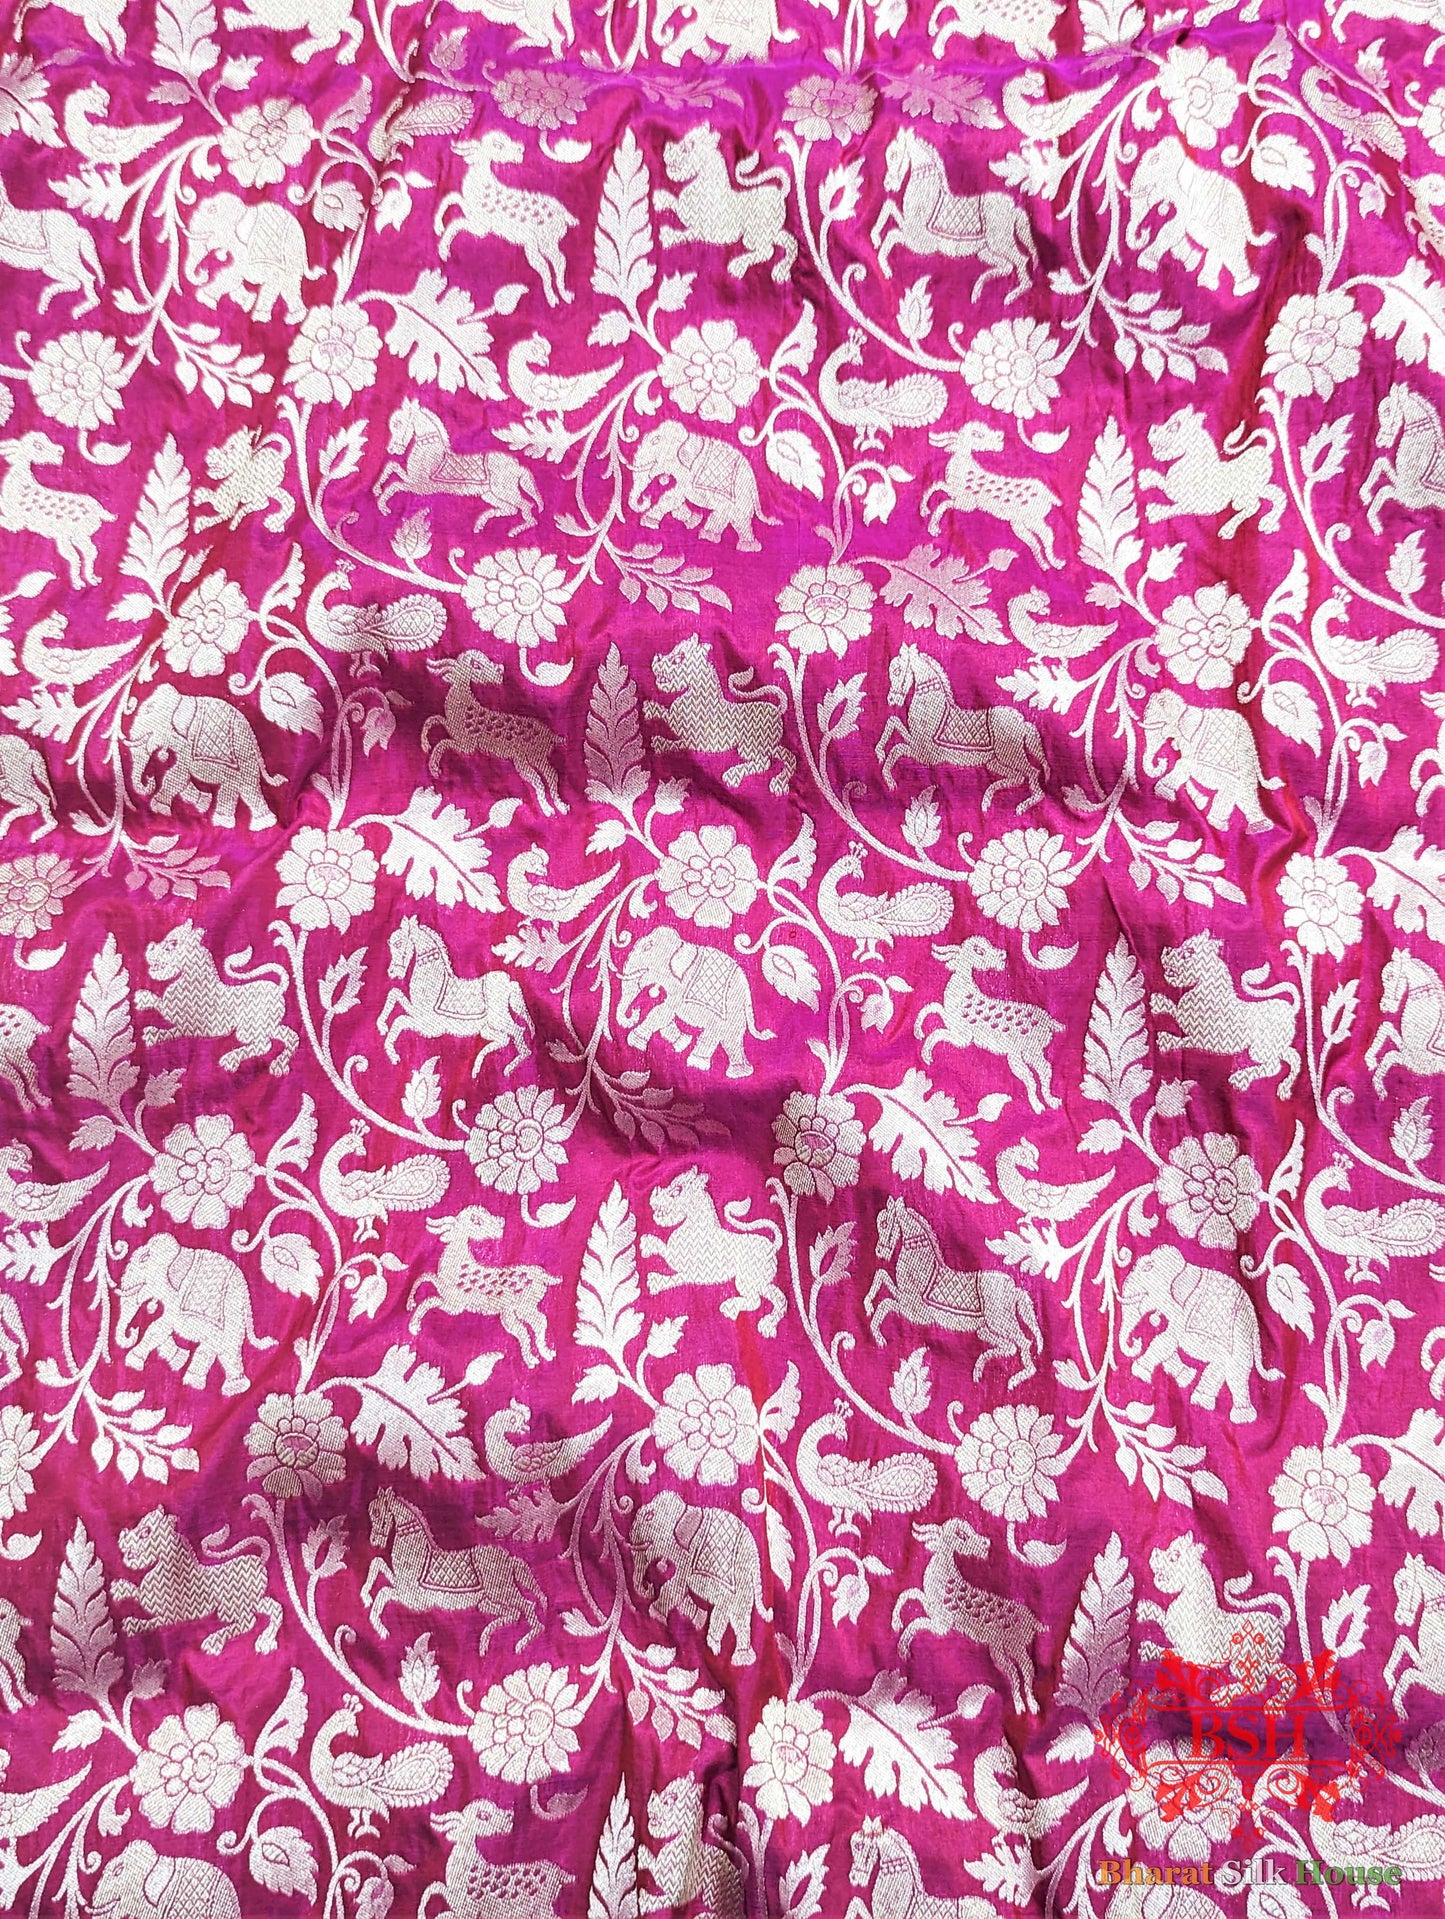 Handloom Banarasi  Shikargah Kataan Silk Saree In Shades Of Pink Pure Kataan Silk Bharat Silk House